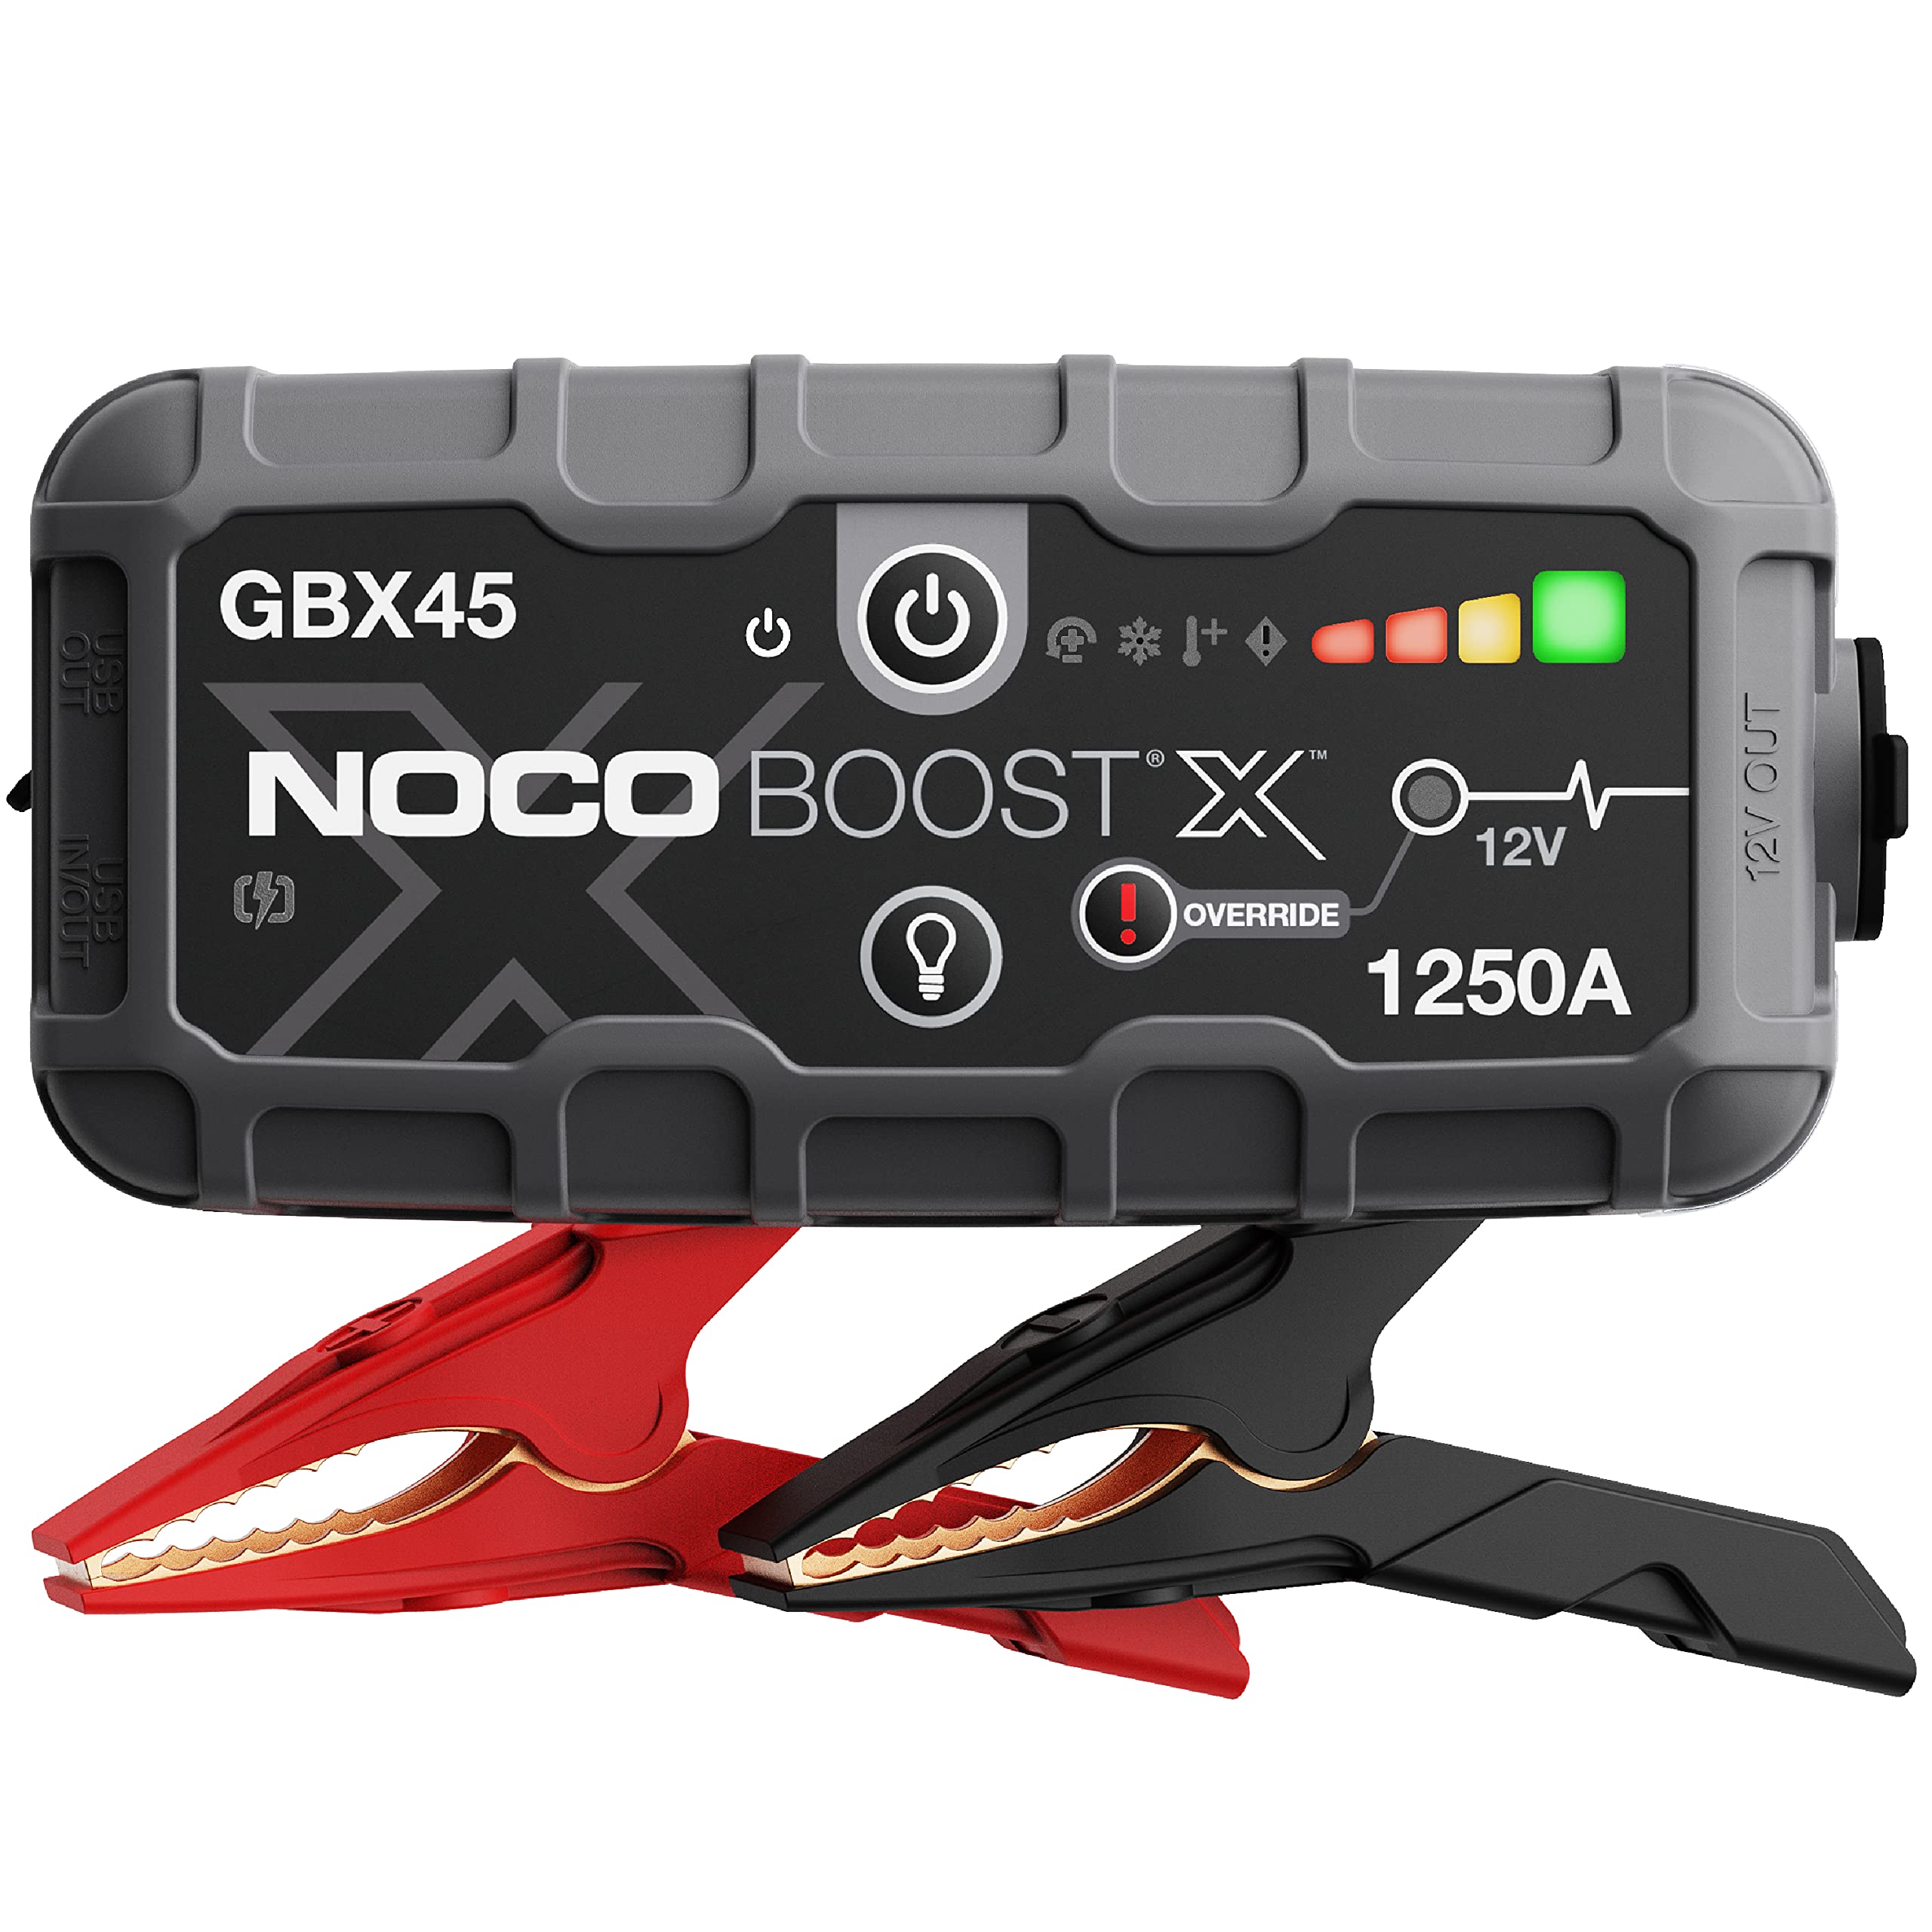 NOCO Boost X GBX45 1250A 12V UltraSafe Portable Lithium...